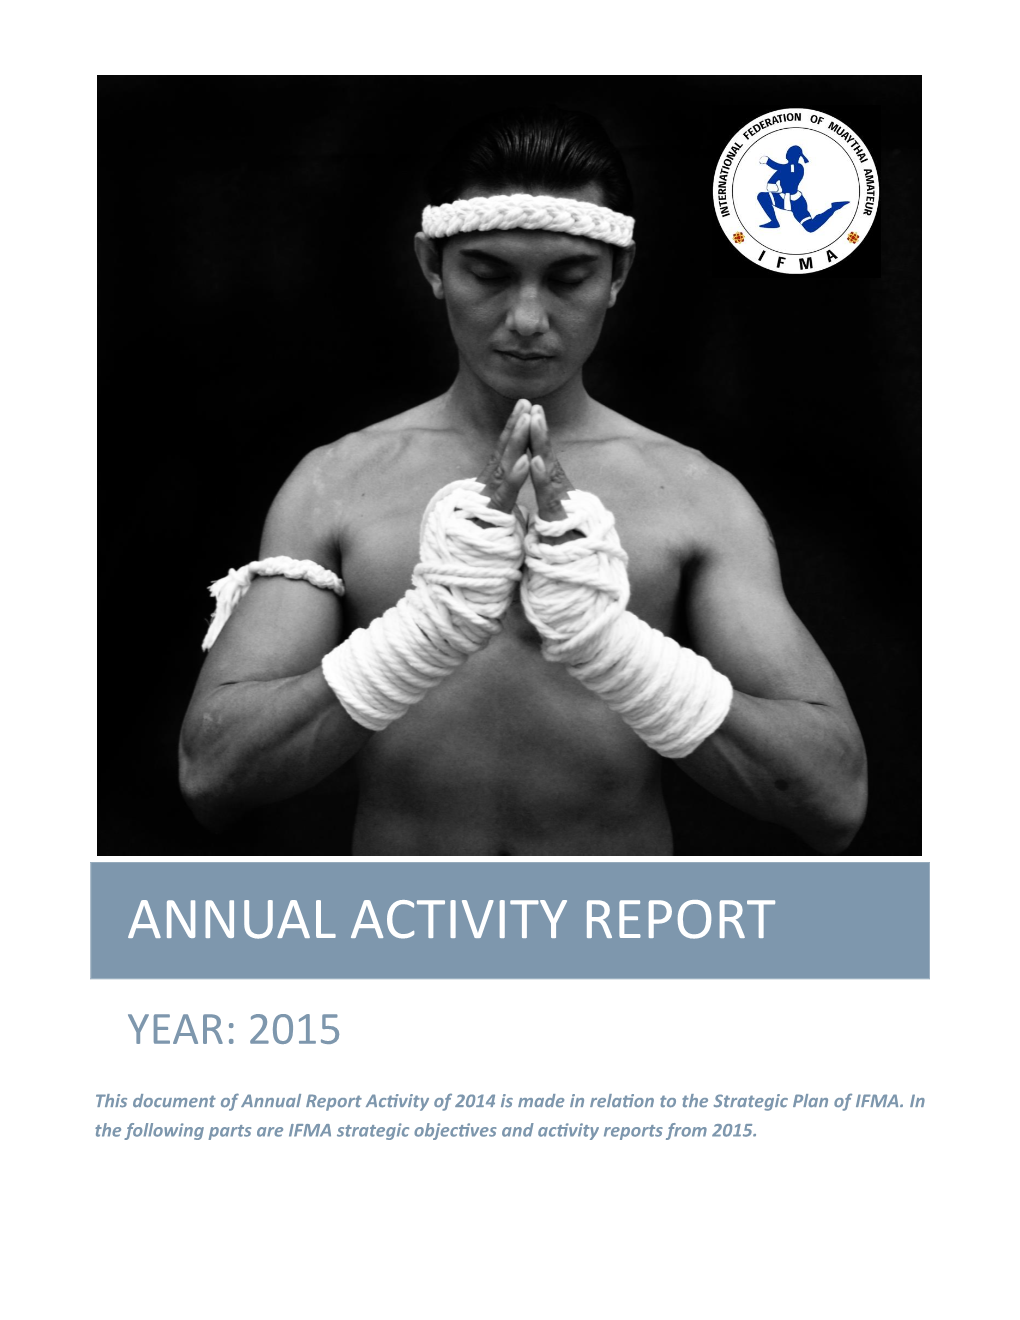 2015 Annual Activity Report